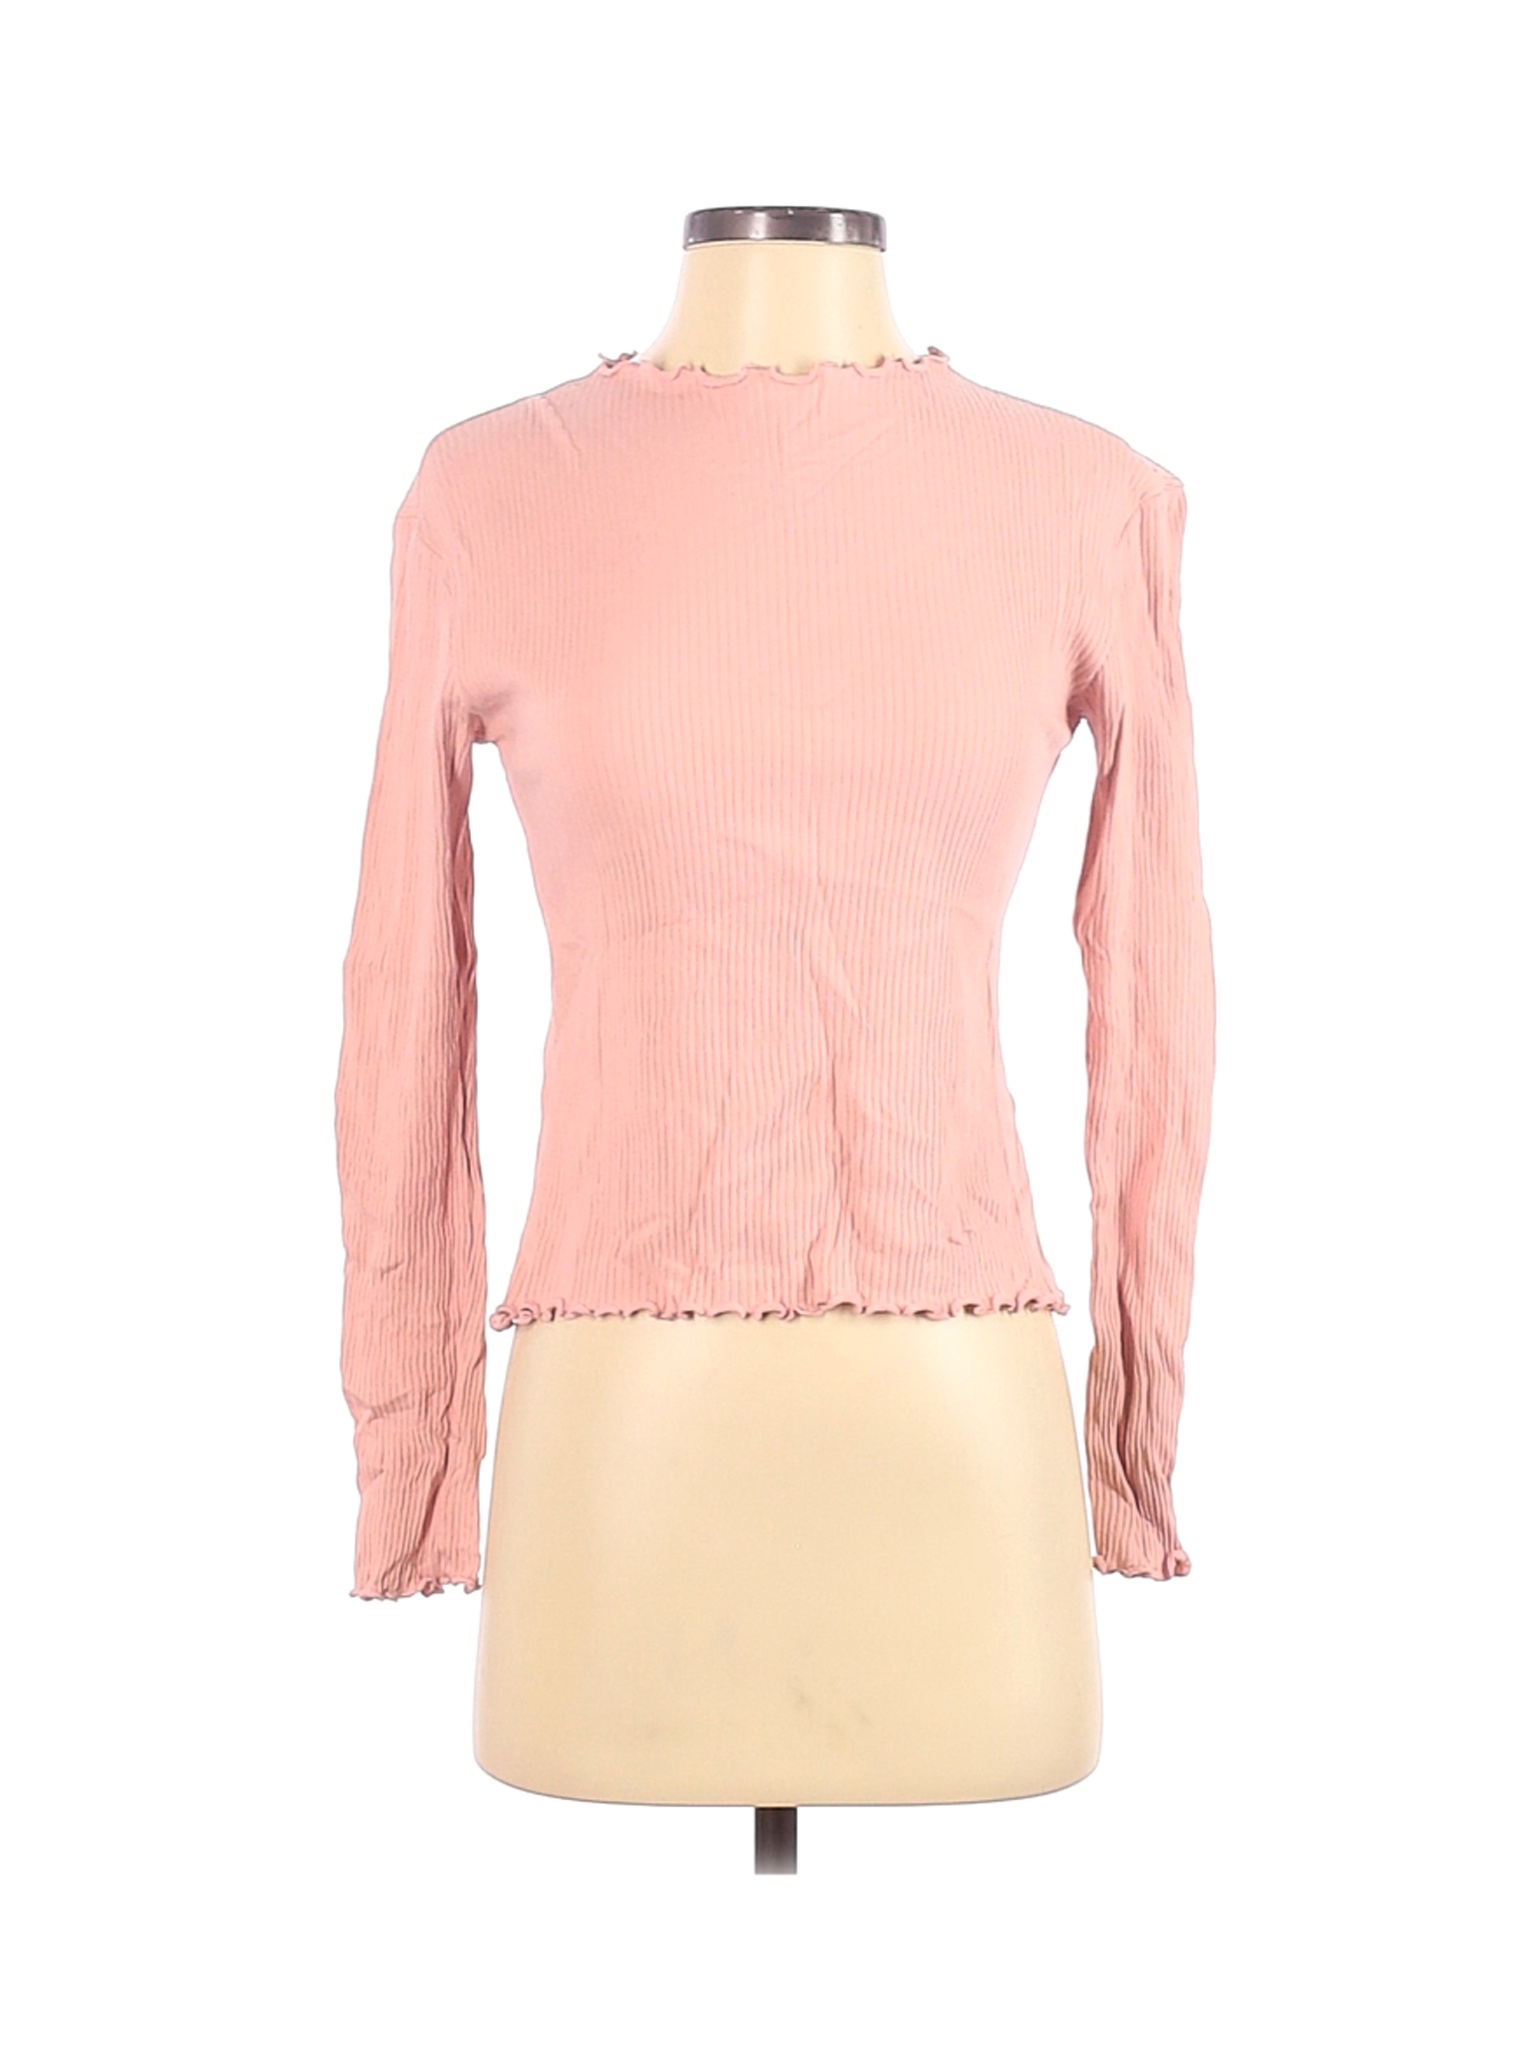 Pieces Women Pink Long Sleeve Top S | eBay